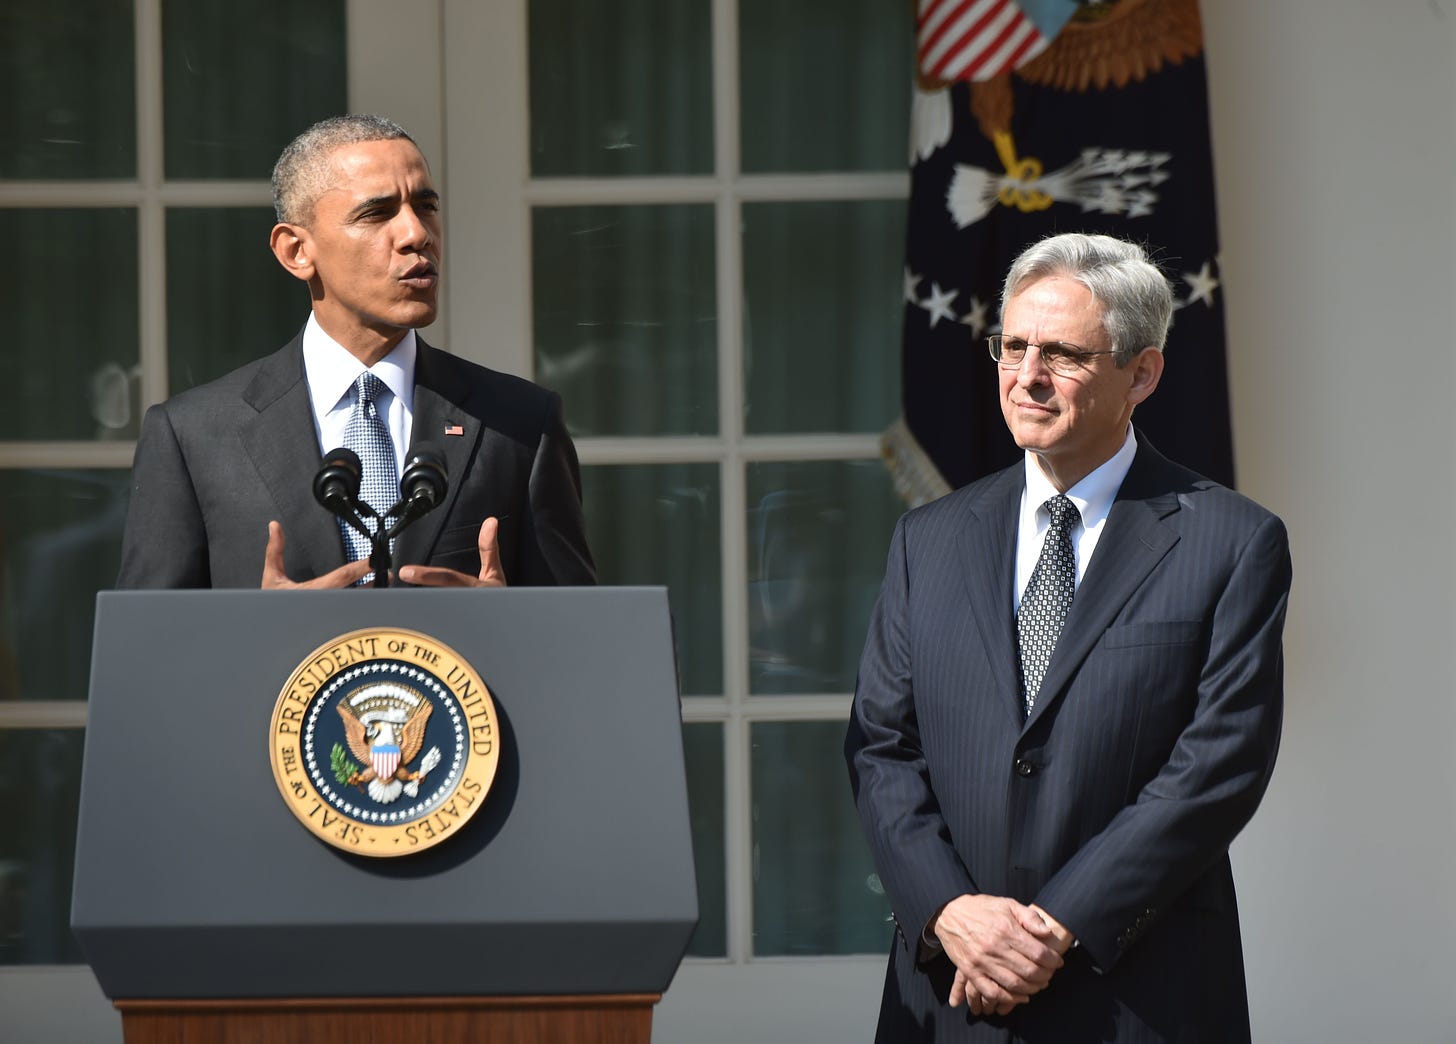 Merrick Garland Is Named As President Obama's Supreme Court Nominee | NPR & Houston Public Media